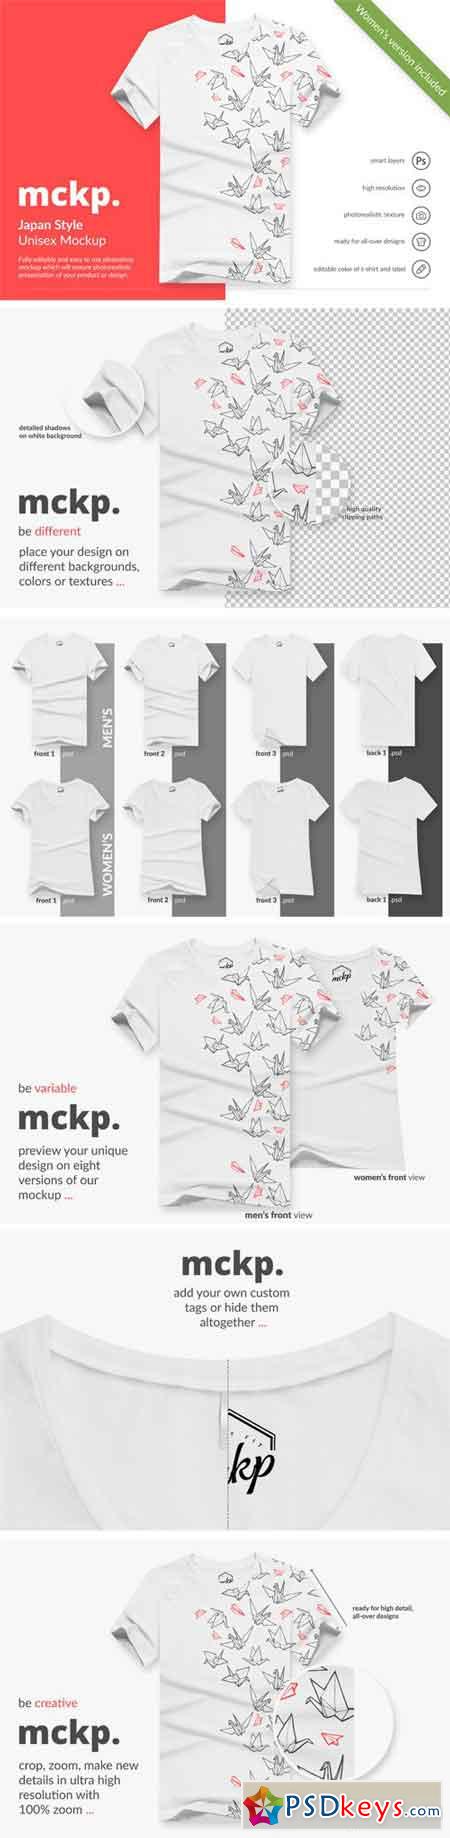 Japan Style by mckp - Tshirt Mockups 1428977